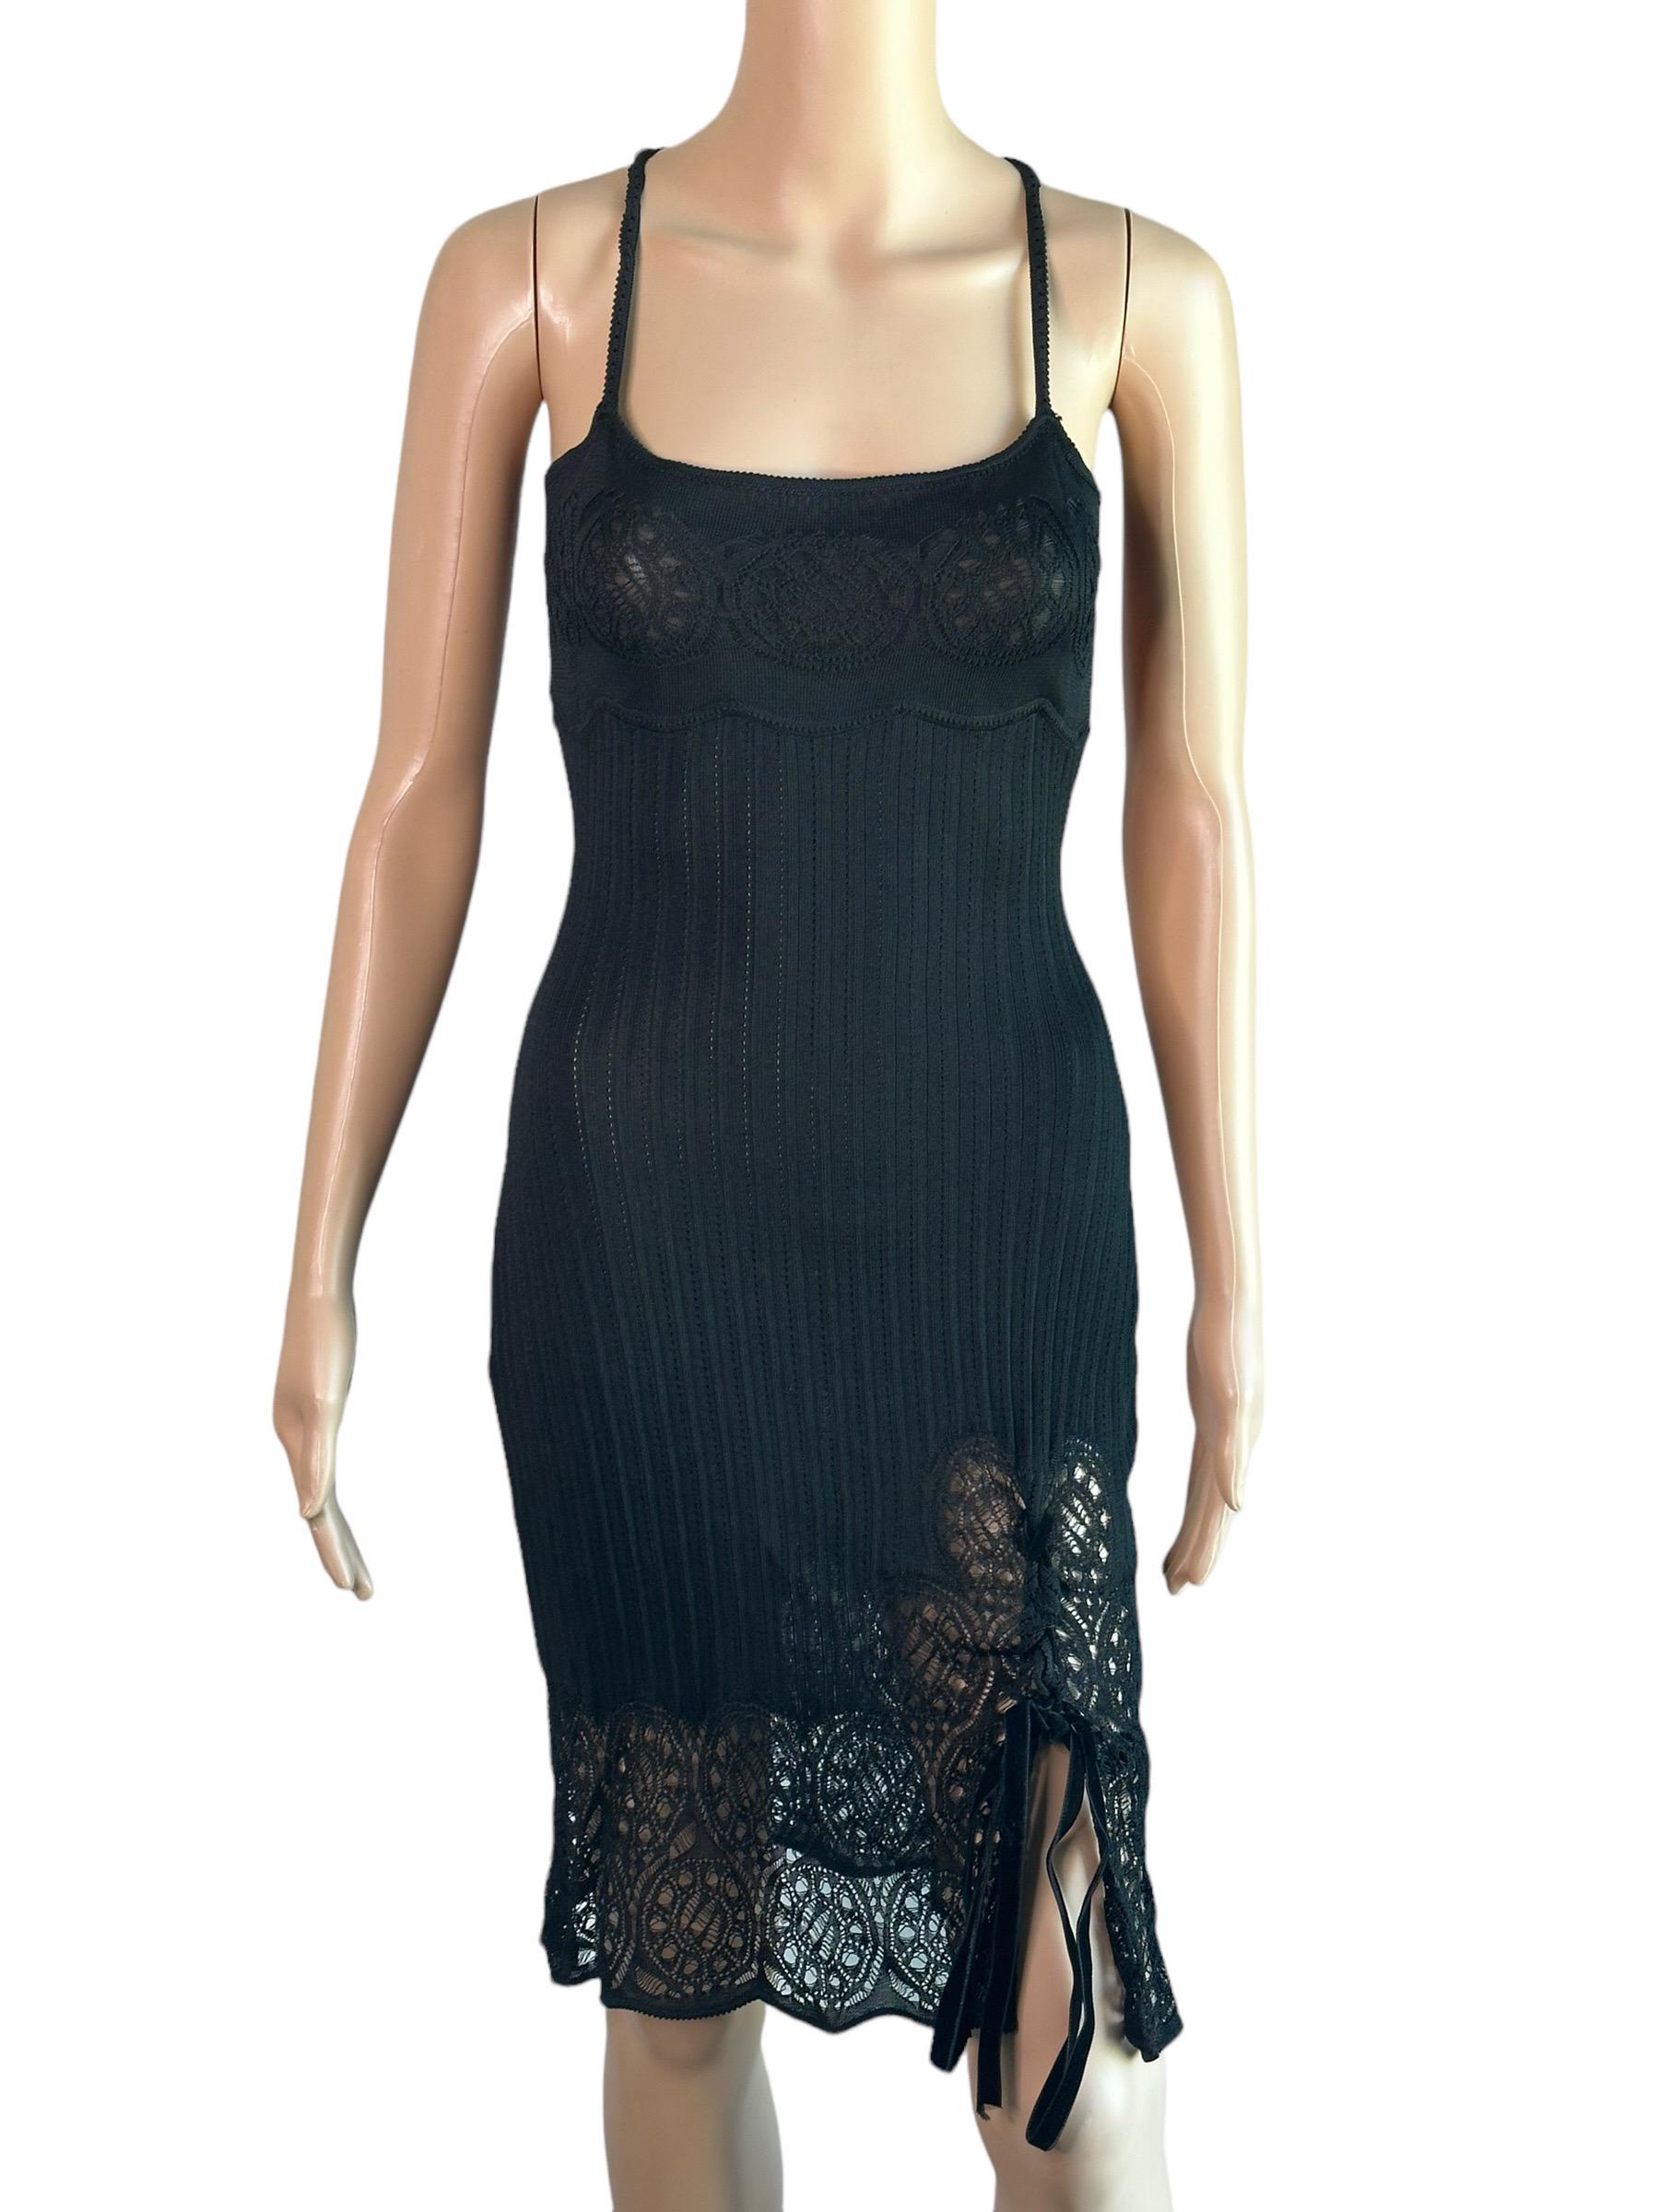 John Galliano S/S 1999 - Mini robe noire en dentelle transparente ouverte Unisexe en vente